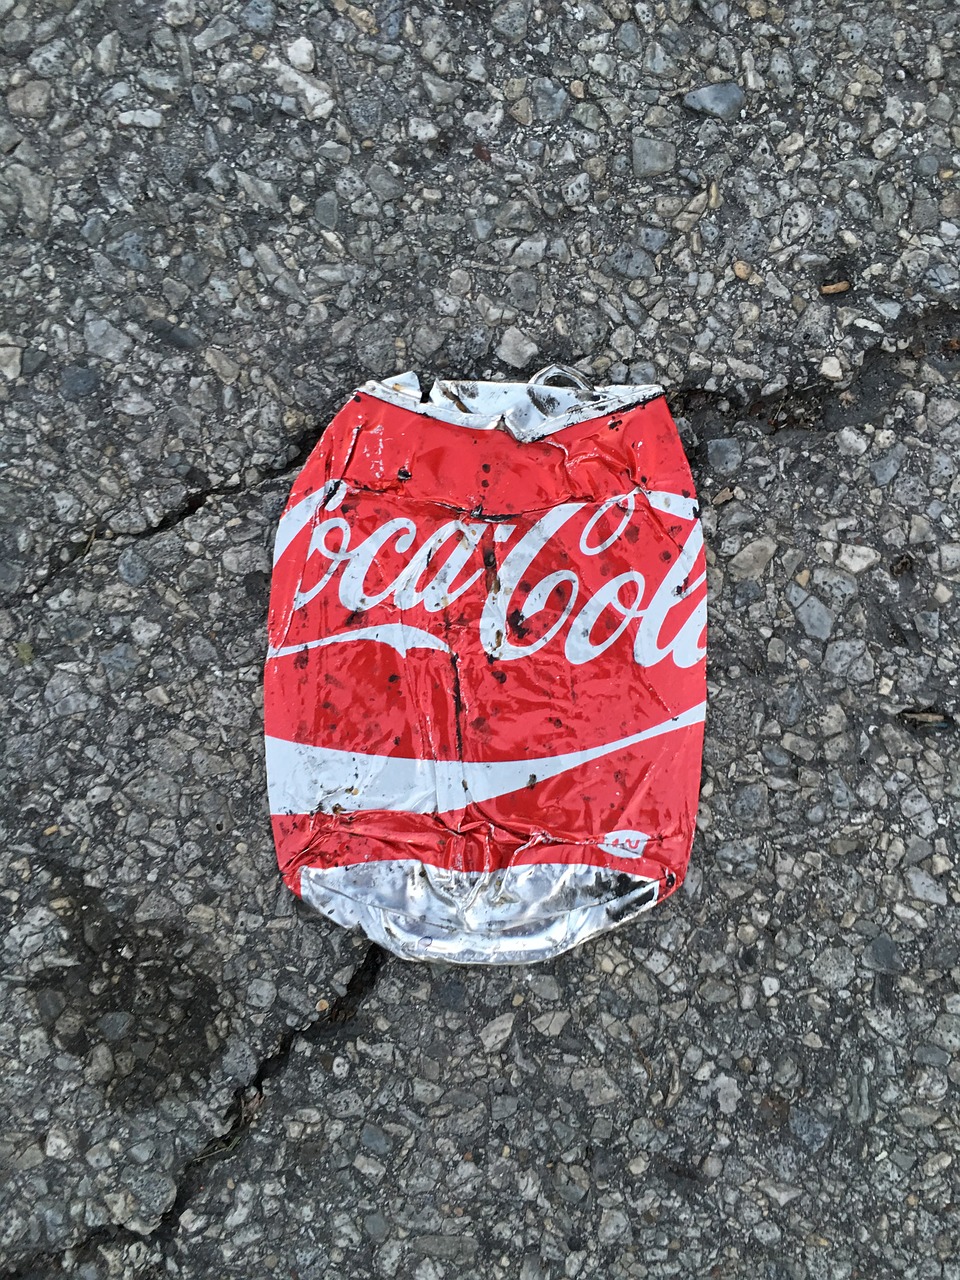 smashed can soda free photo